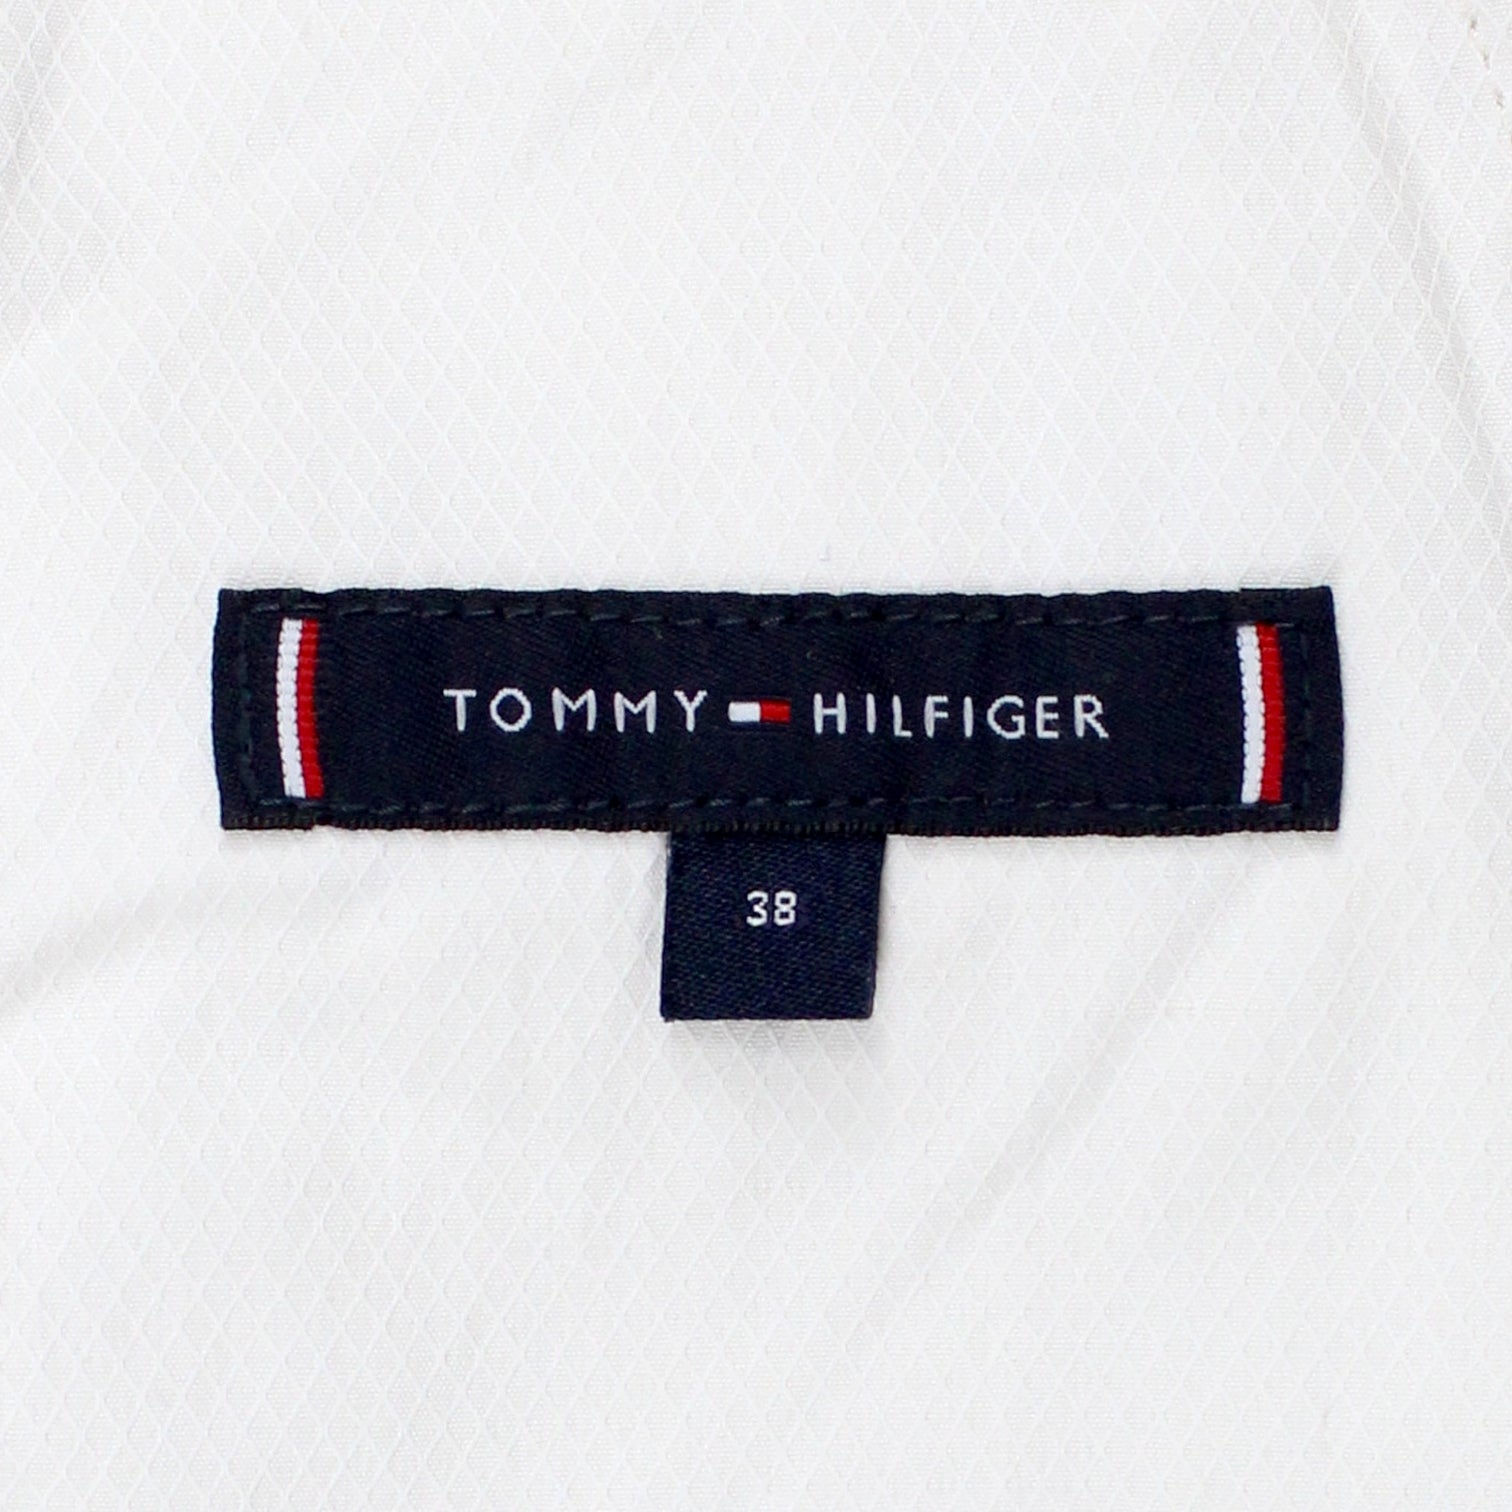 Tommy Hilfiger Cream Harlem Shorts